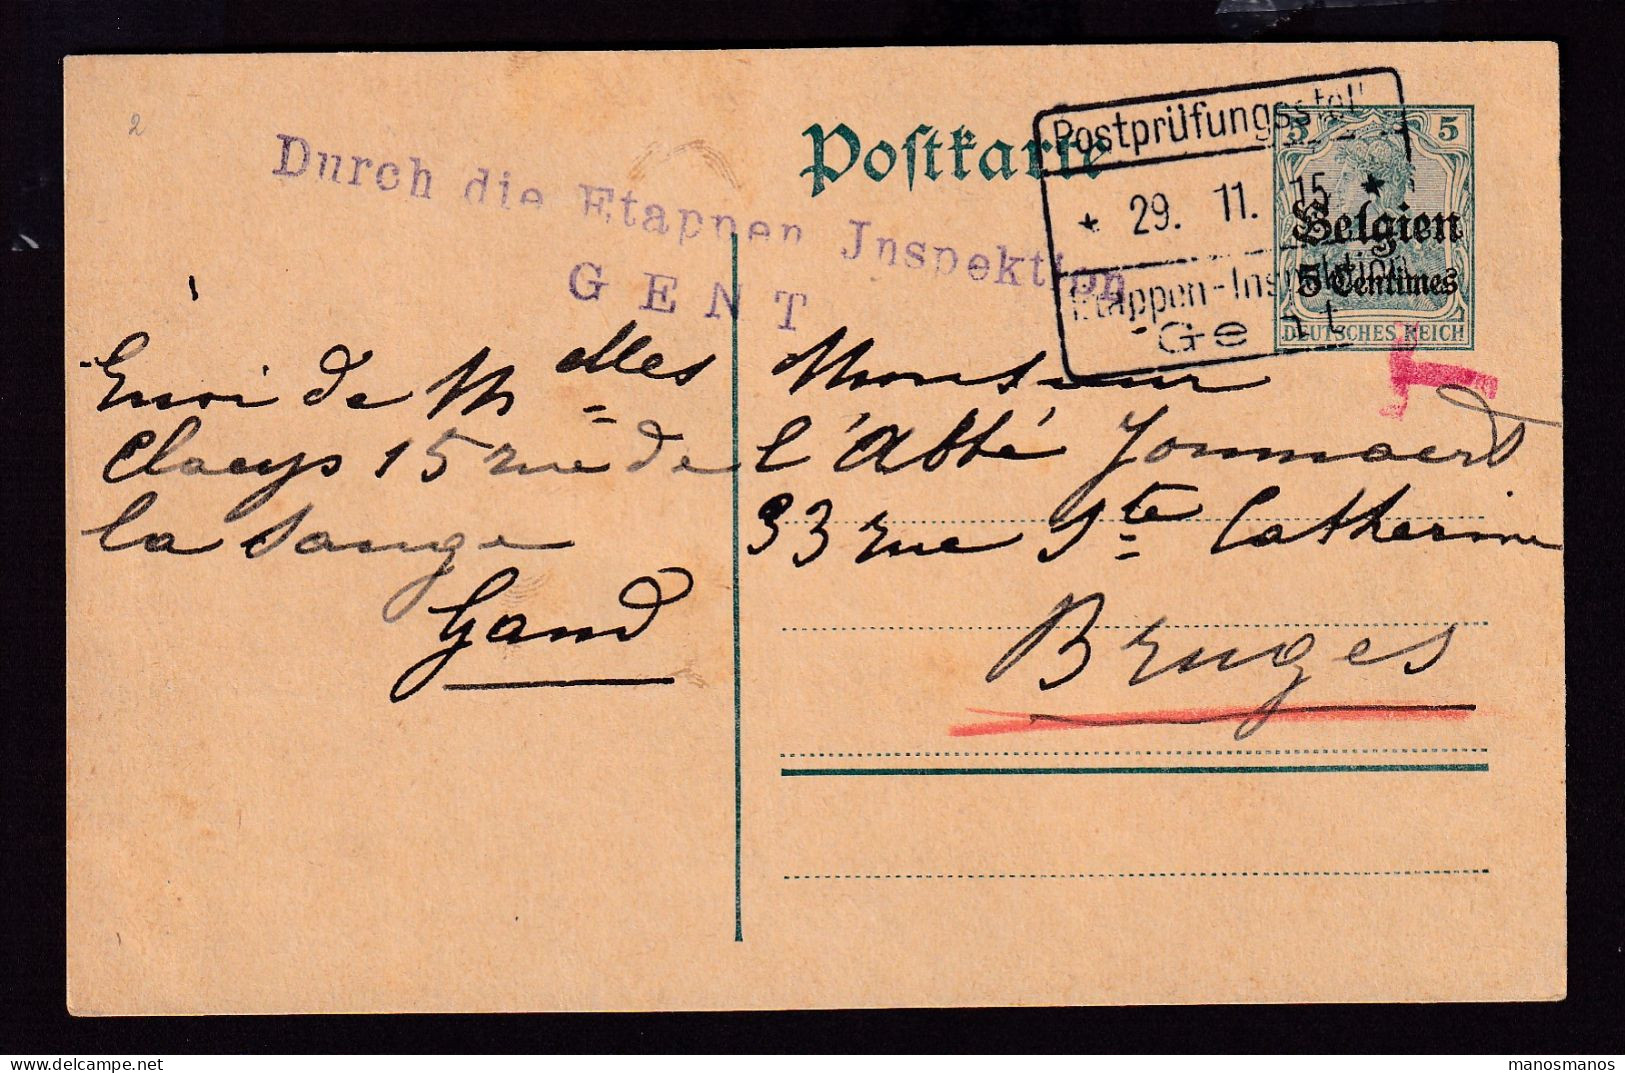 235/41 - BRUGGE Burgerpost Taks - Entier Postal Germania GENT Novembre 1915 Vers BRUGES - Grand T Rouge - OC26/37 Territoire Des Etapes